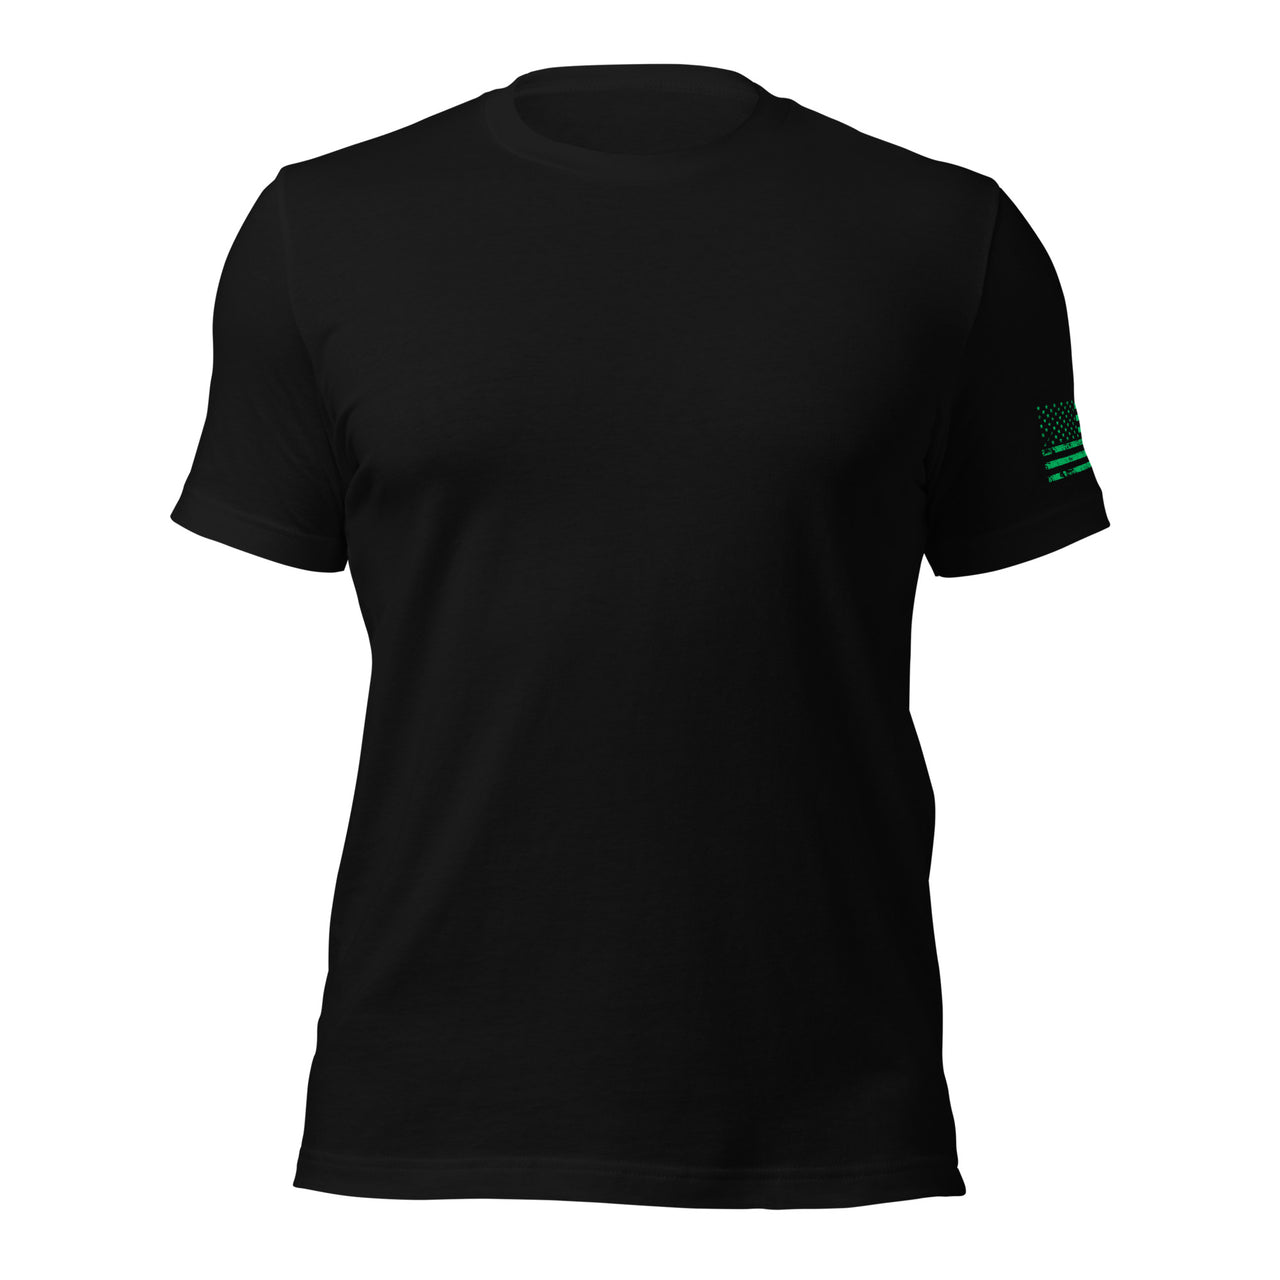 Irish American Flag T-Shirt in black front view